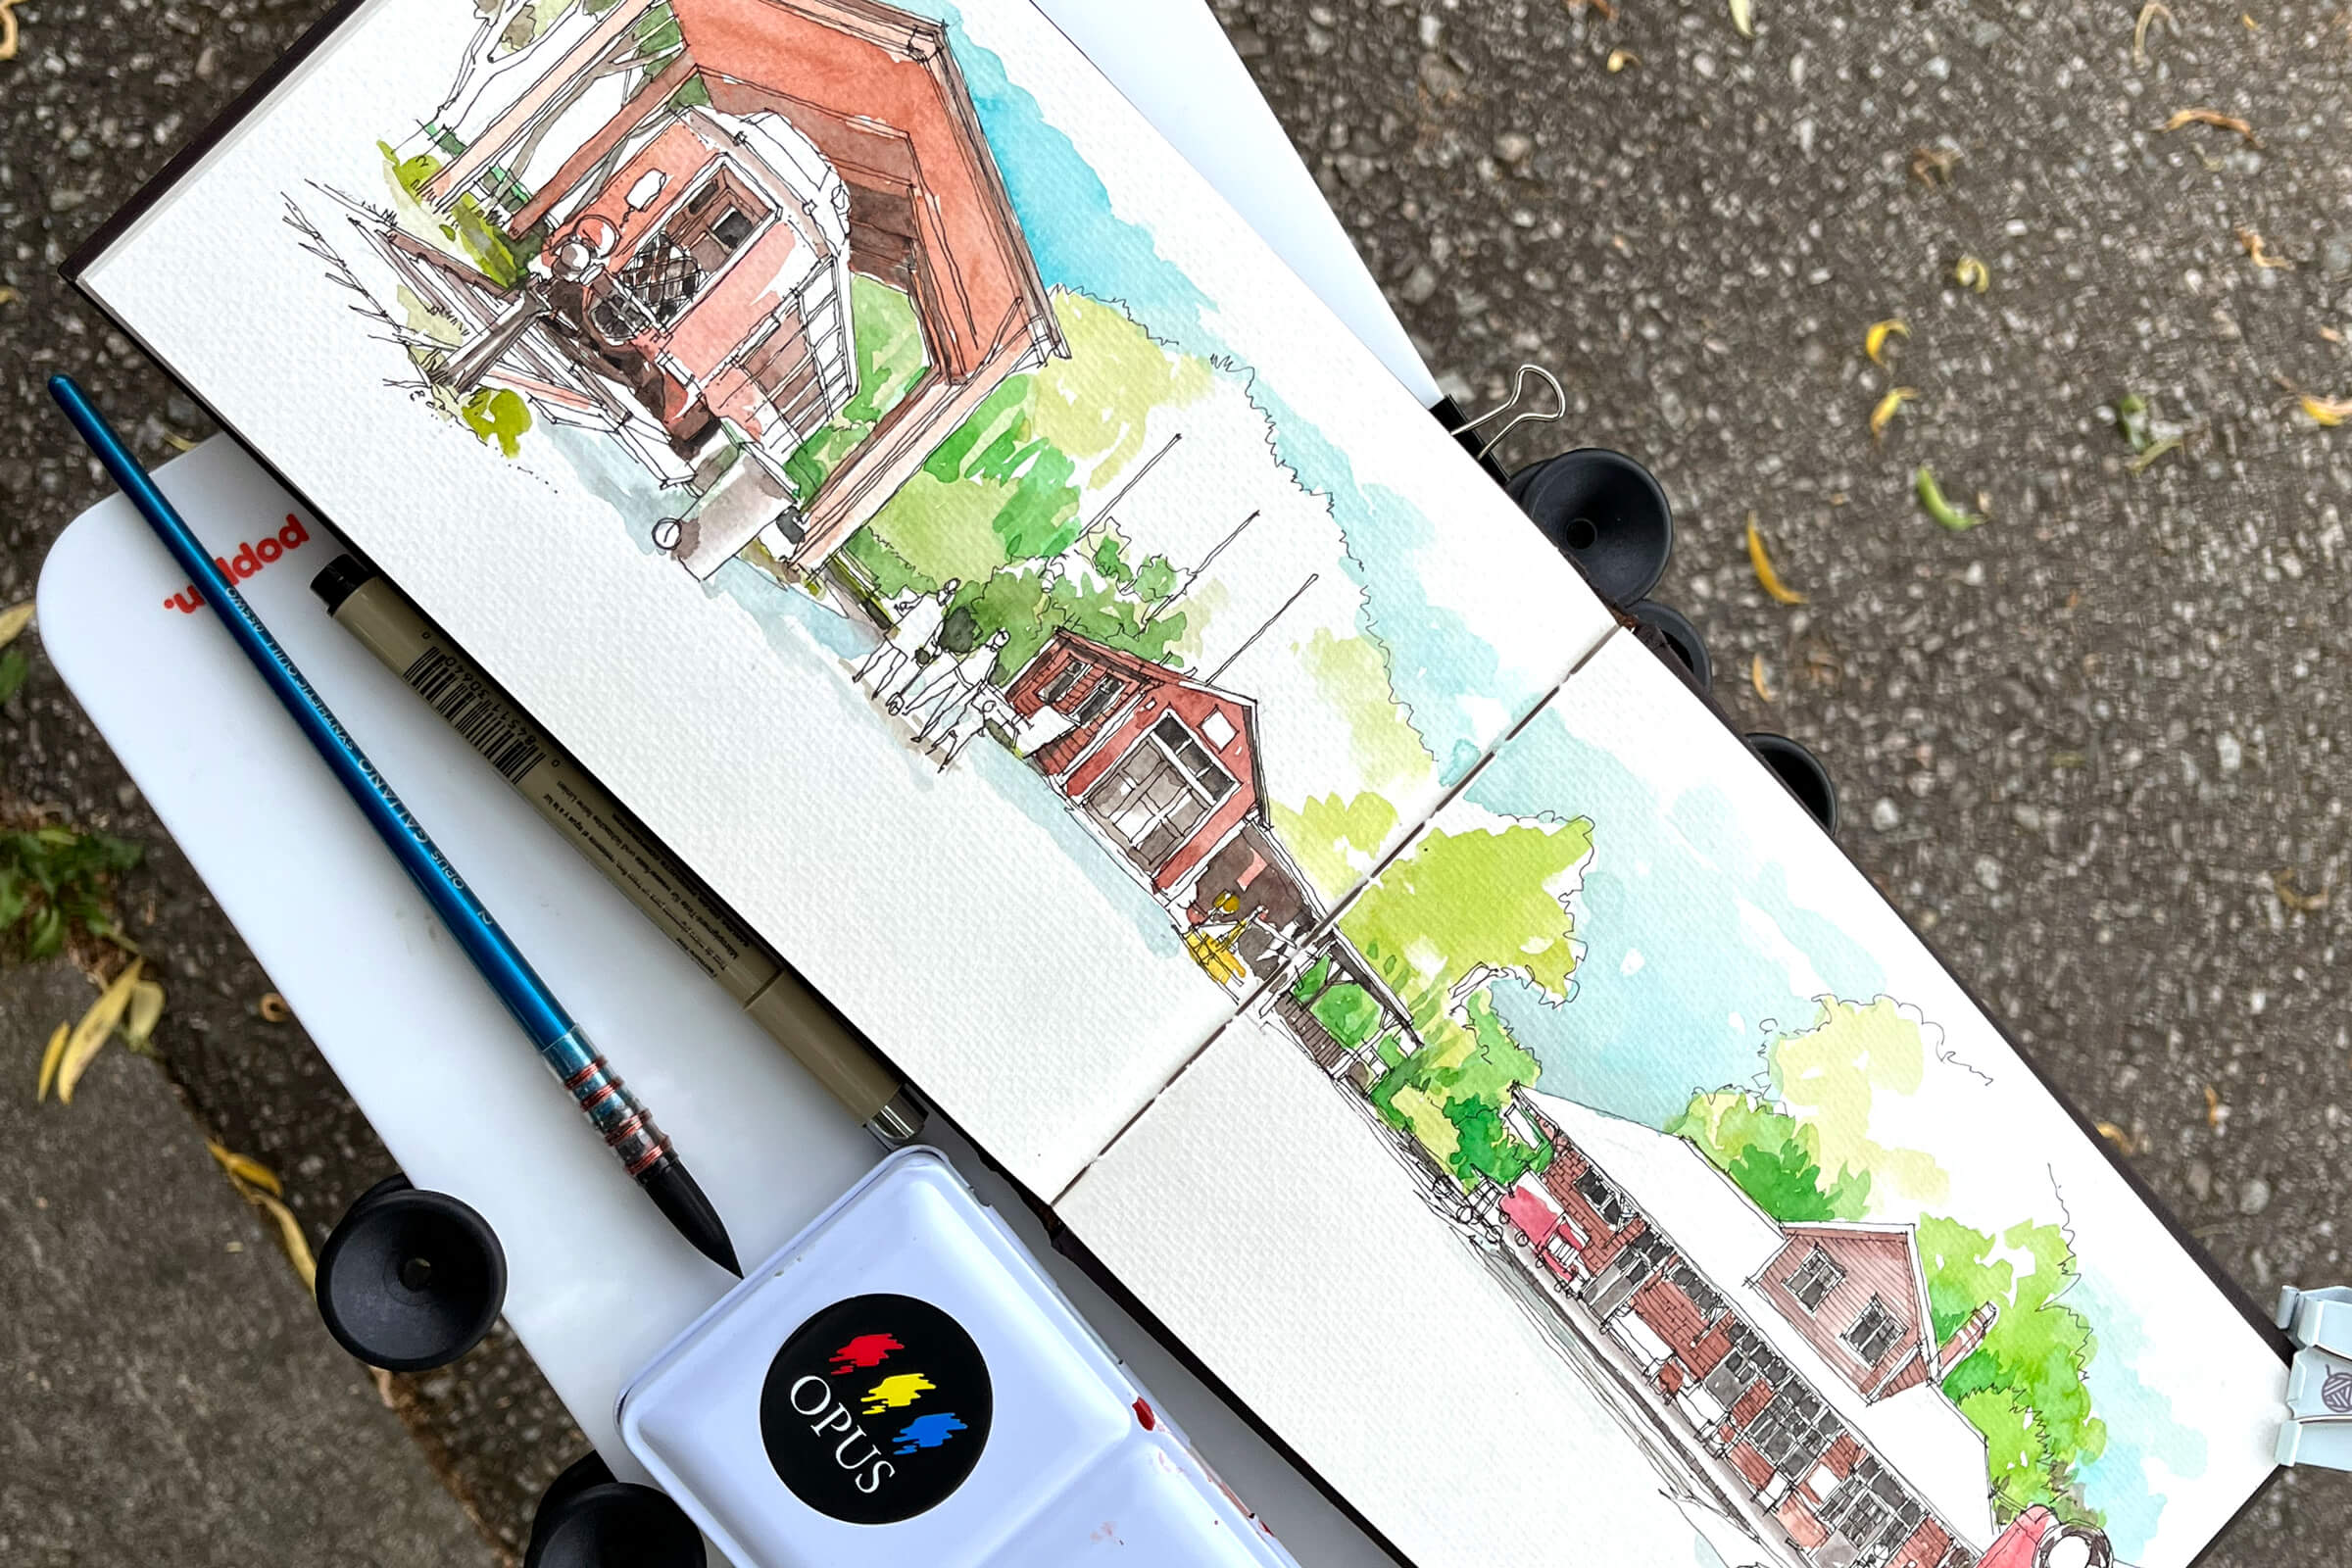 Drawn to The Art of Urban Sketching  Naples Florida Weekly